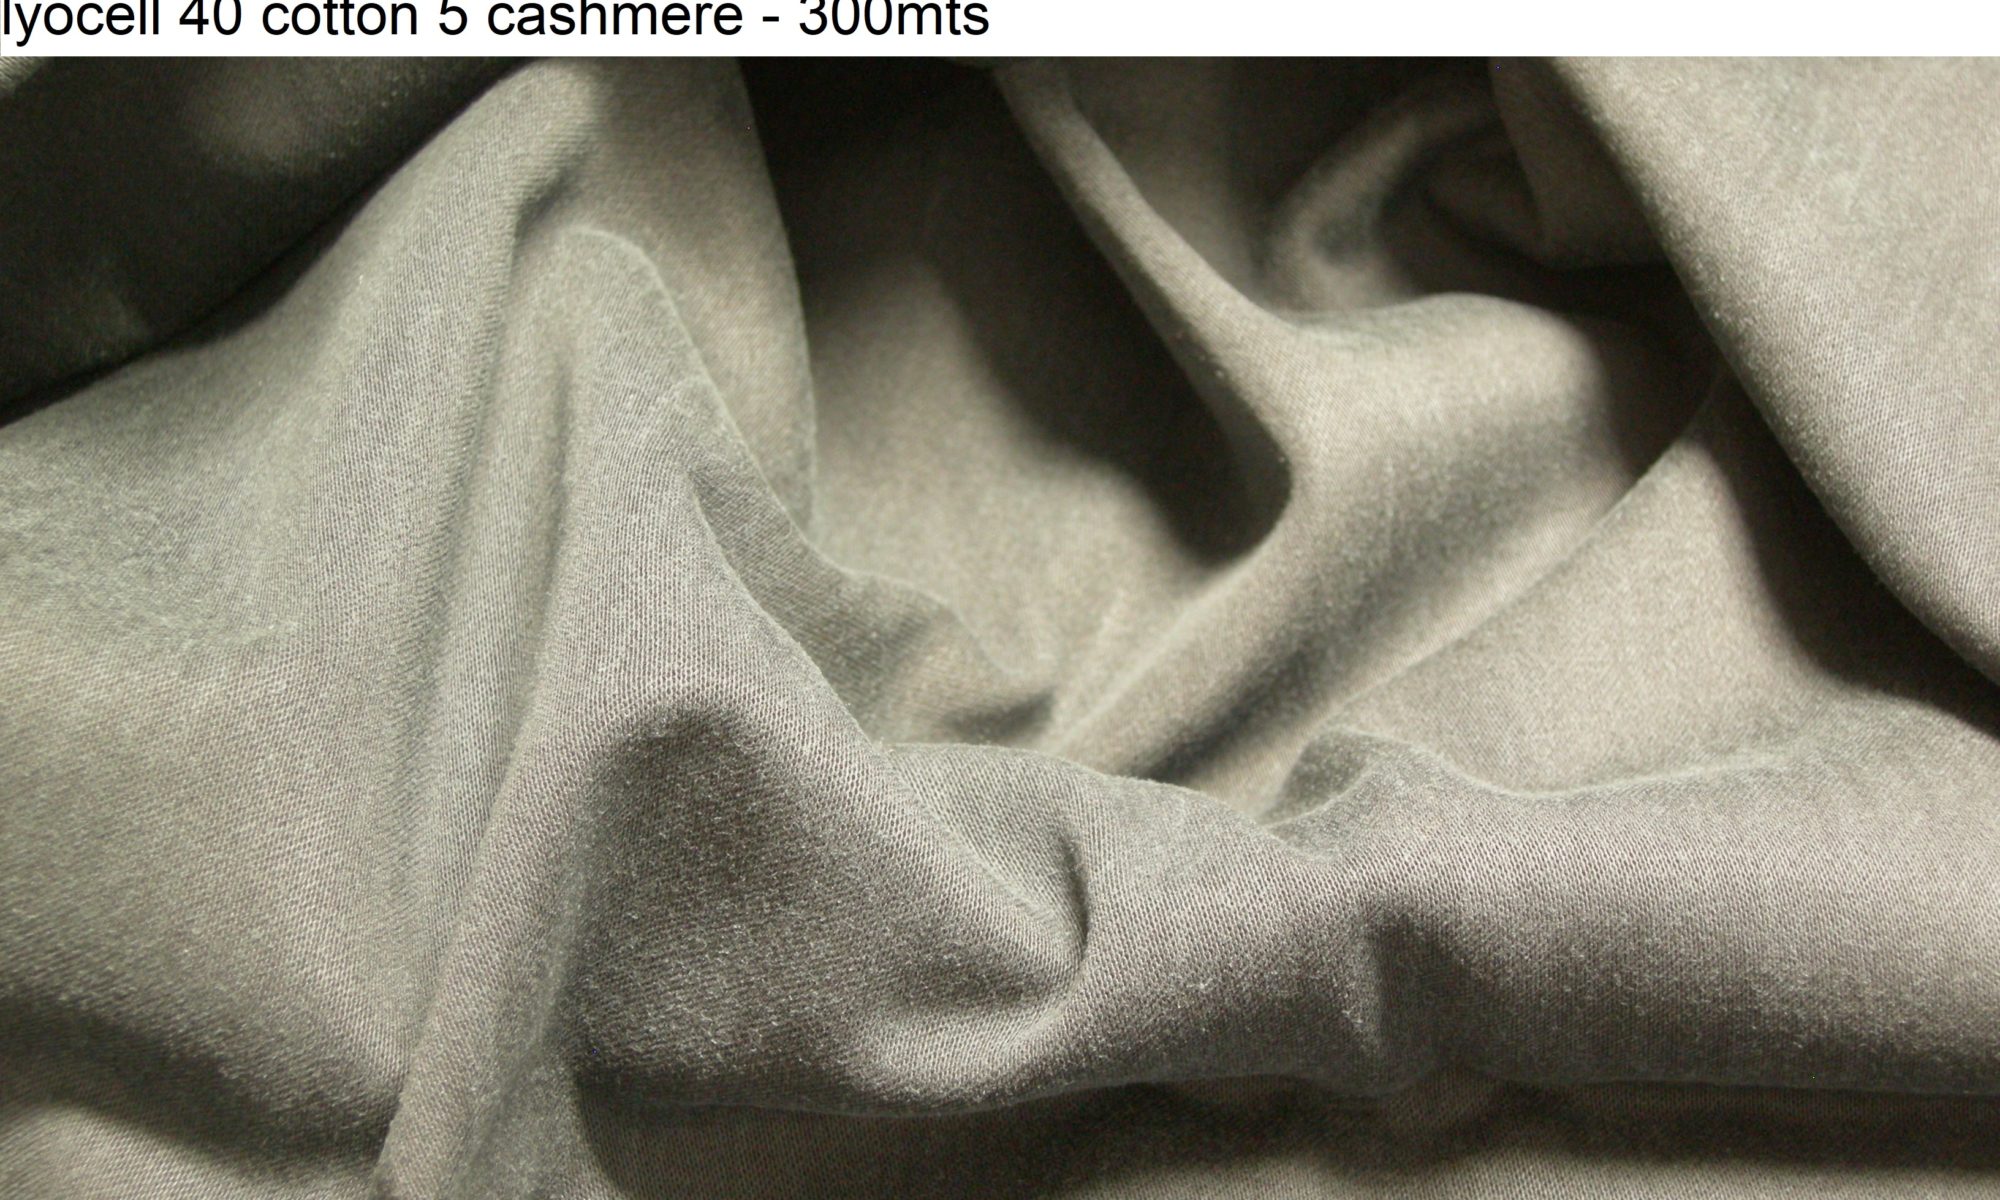 ART 7430 Vintage satin tactel cashmere blend jacket pants fashion fabric WIDTH cm148 WEIGHT gr390 - gr263 square meter - COMPOSITION 56 lyocell 40 cotton 5 cashmere - 300mts